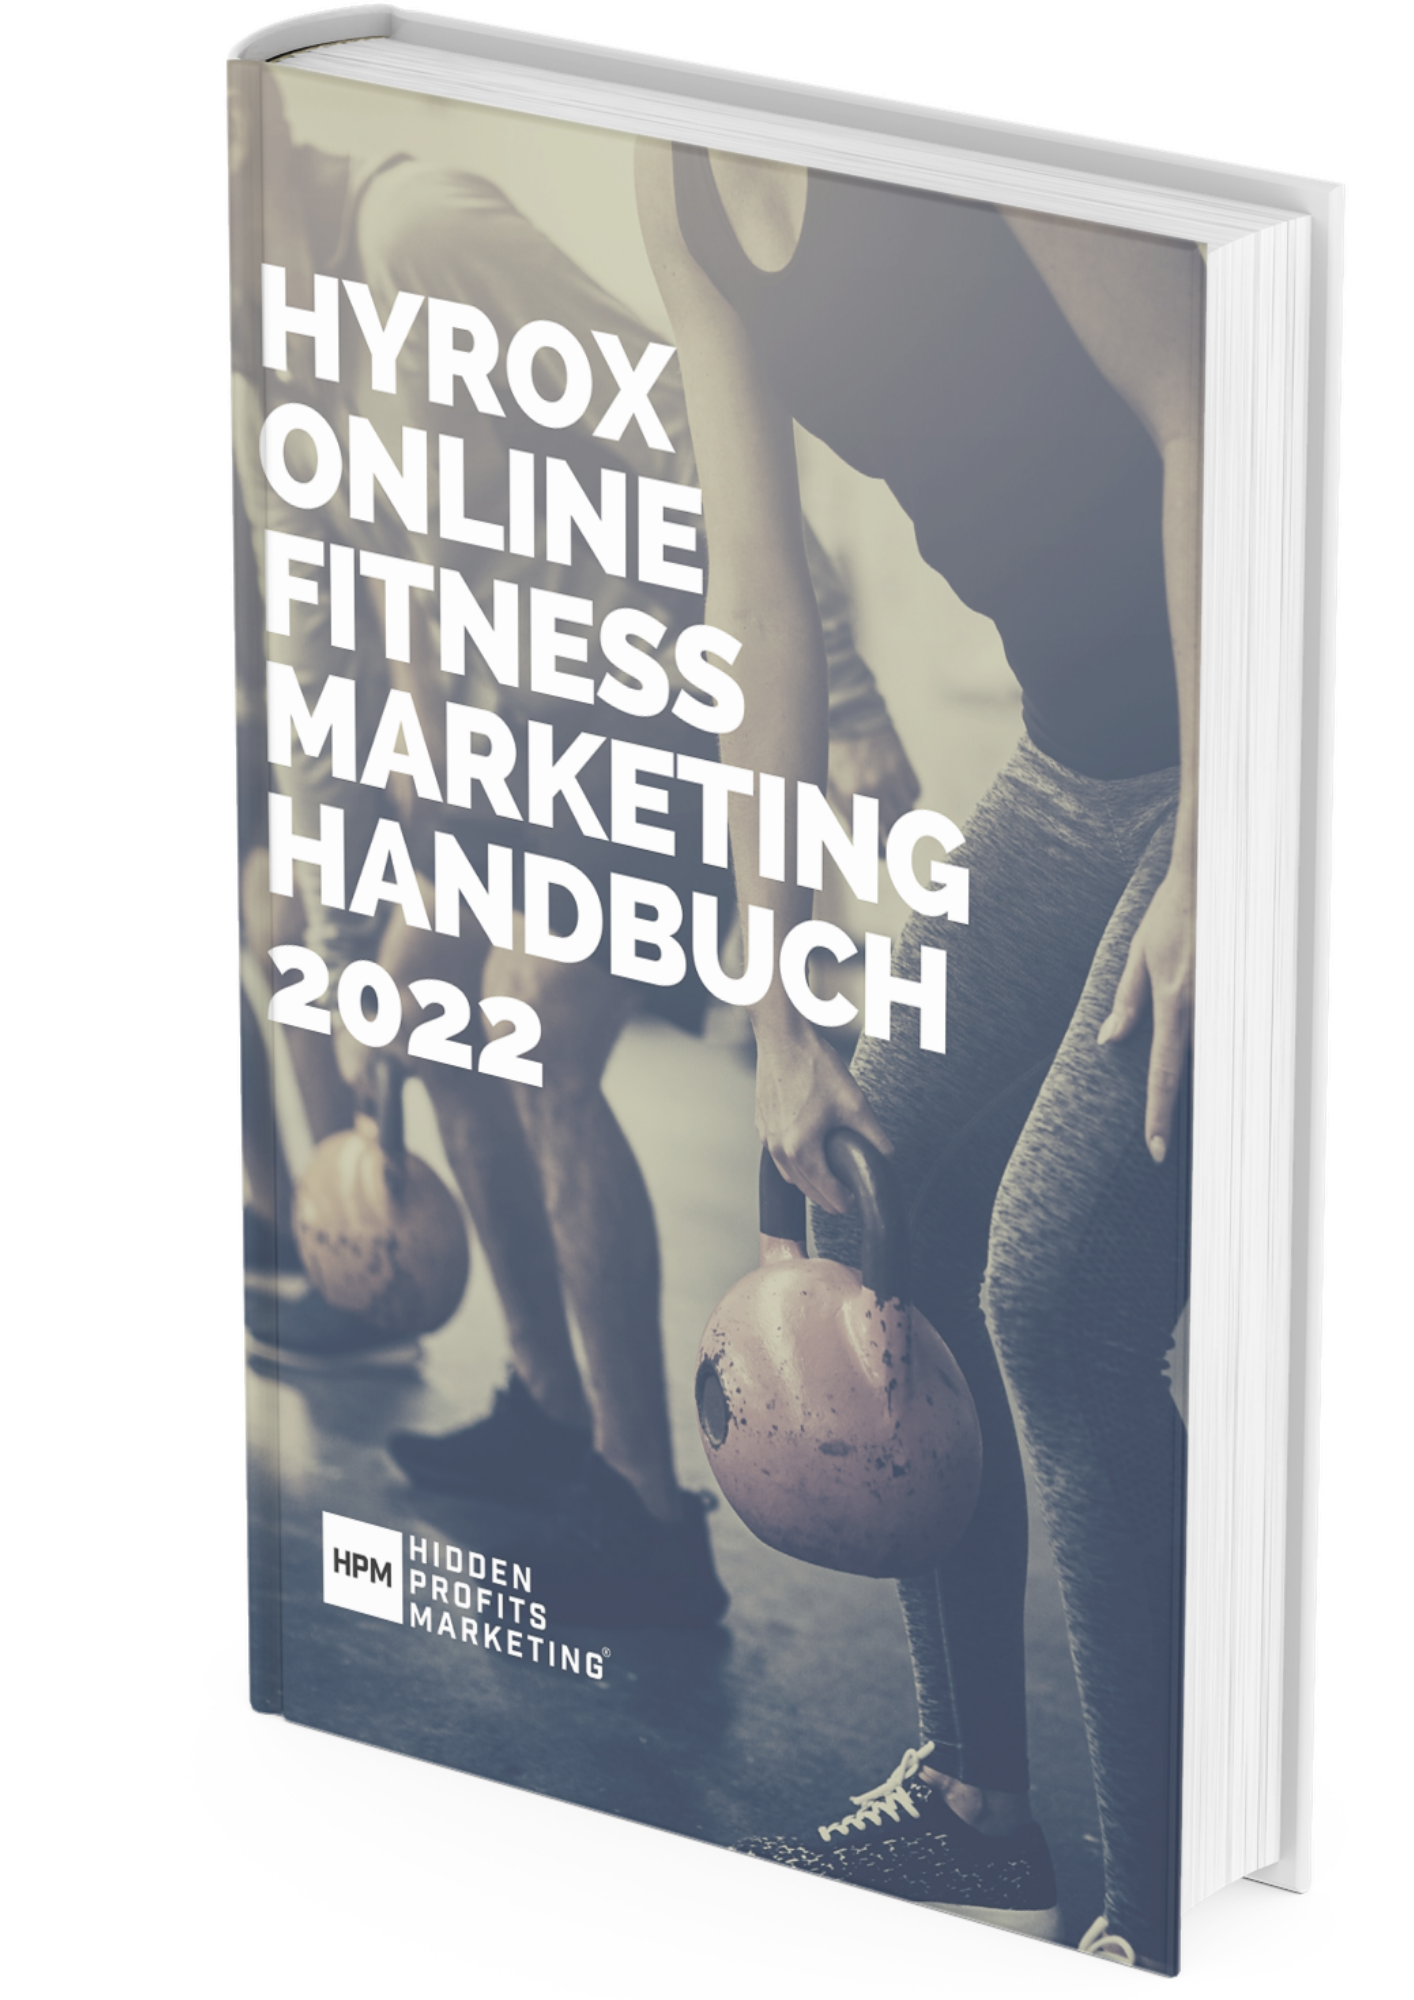 HYROX Online Fitness Marketing Handbuch 2022 